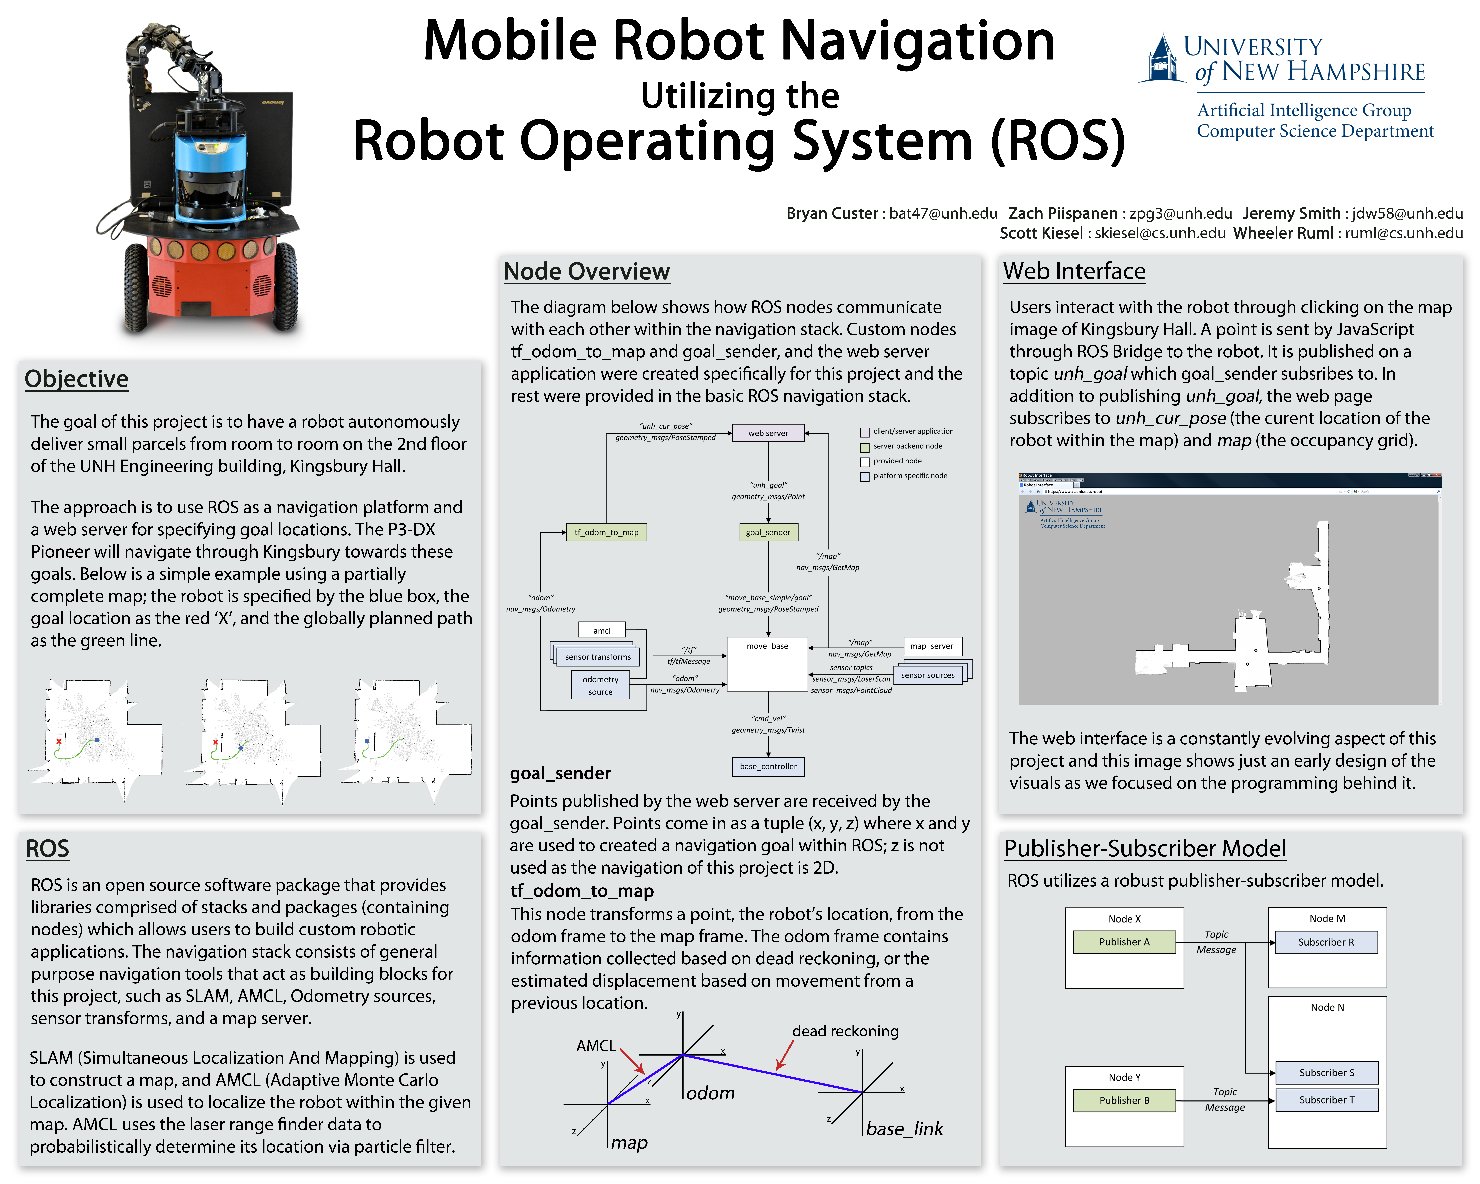 Mobile Robot Navigation Utilizing The Robot Operating System (Ros) by bat47